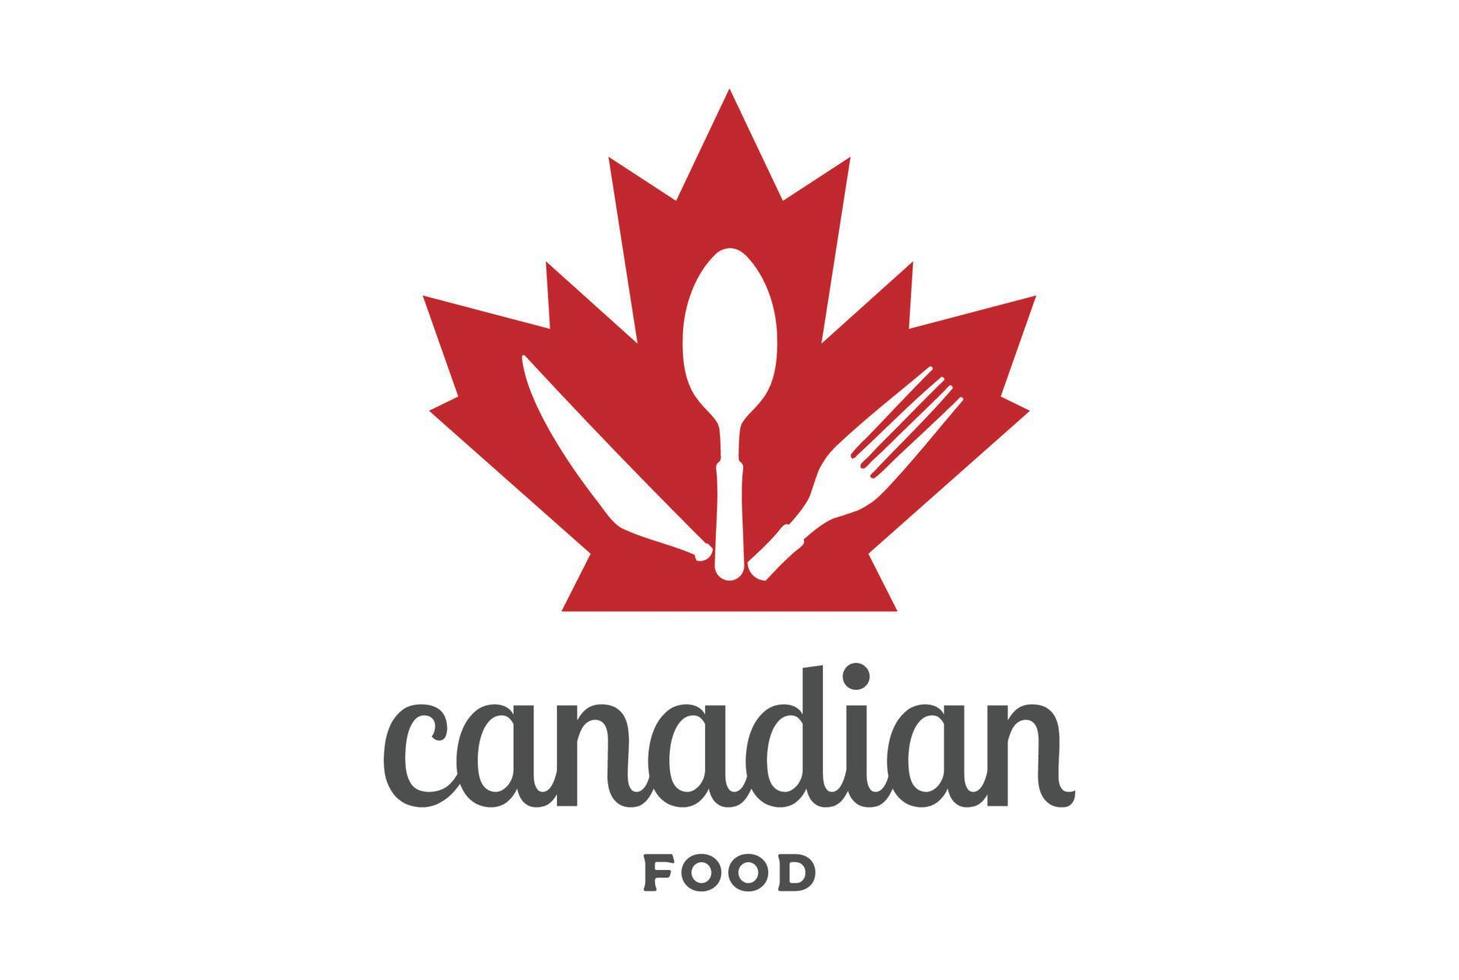 Canada Canadian Flag Maple Leaf with Spoon Fork Knife for Food Restaurant Logo Design vector